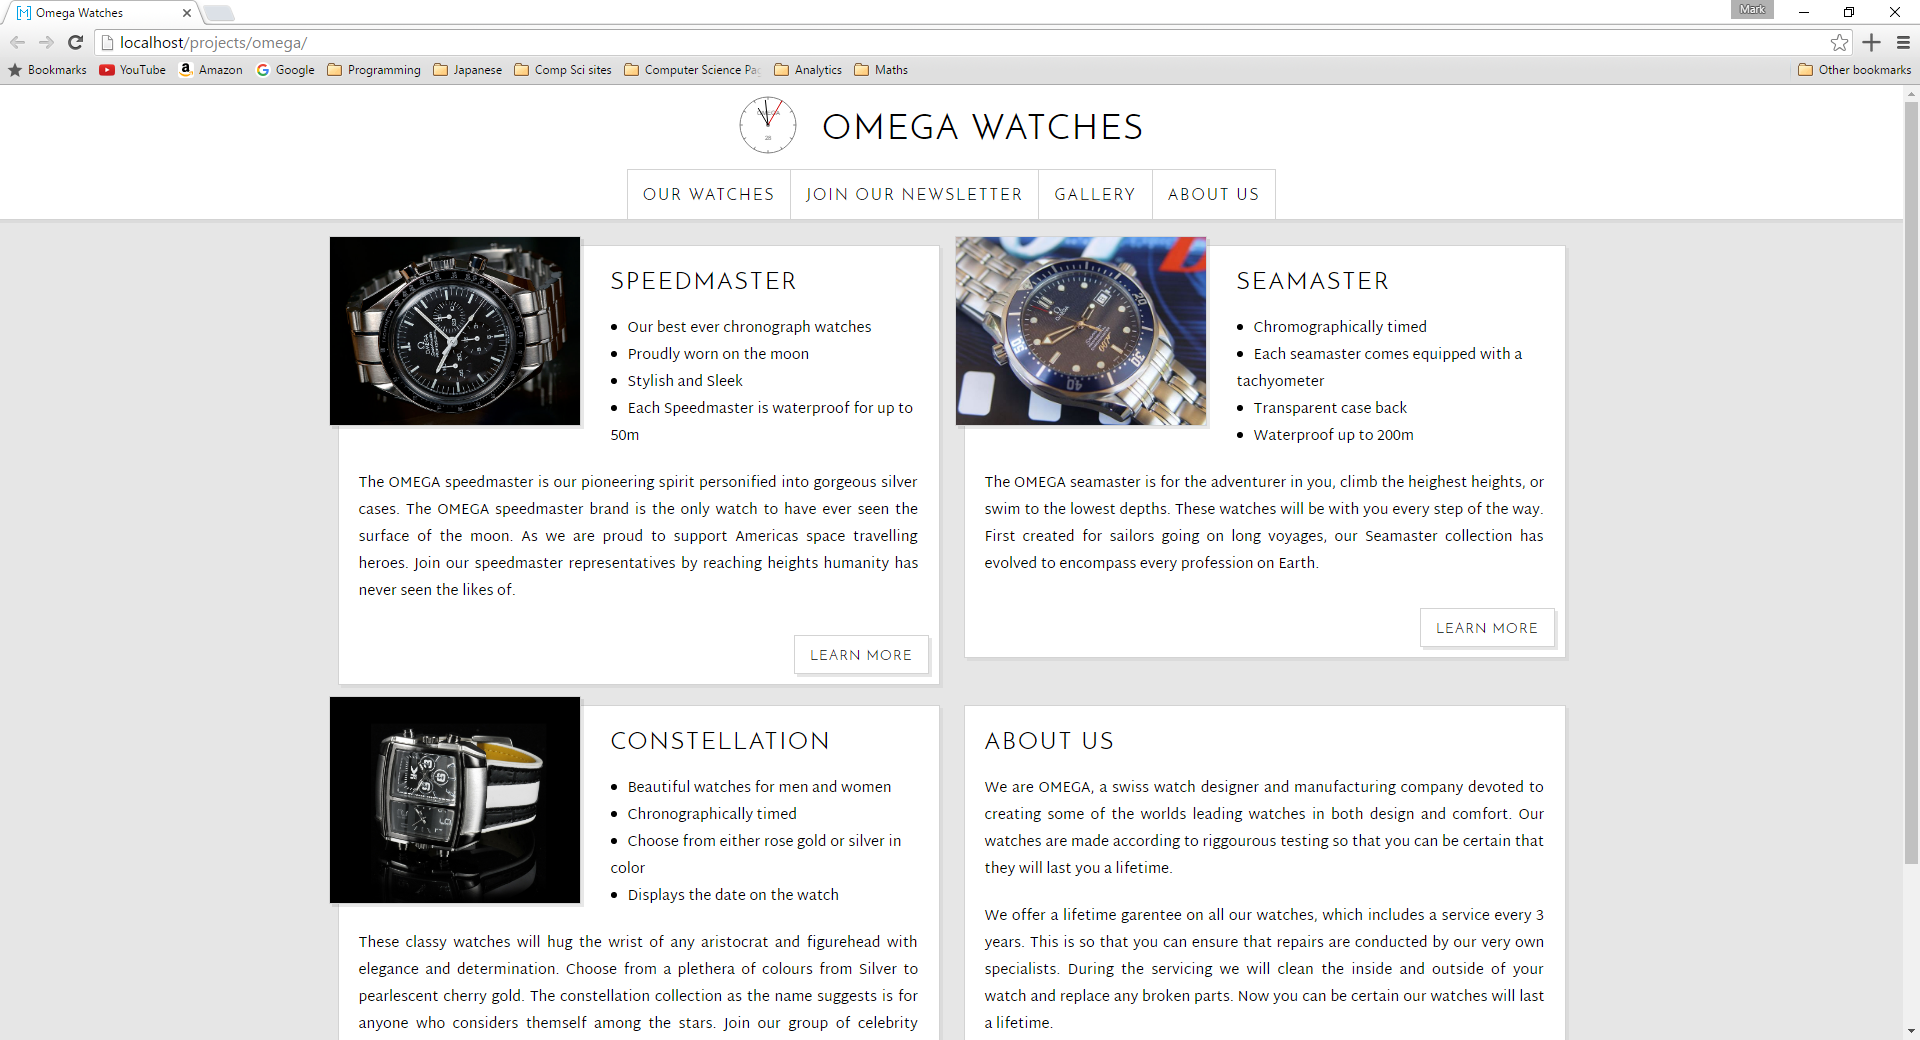 A screenshot showing the omega website